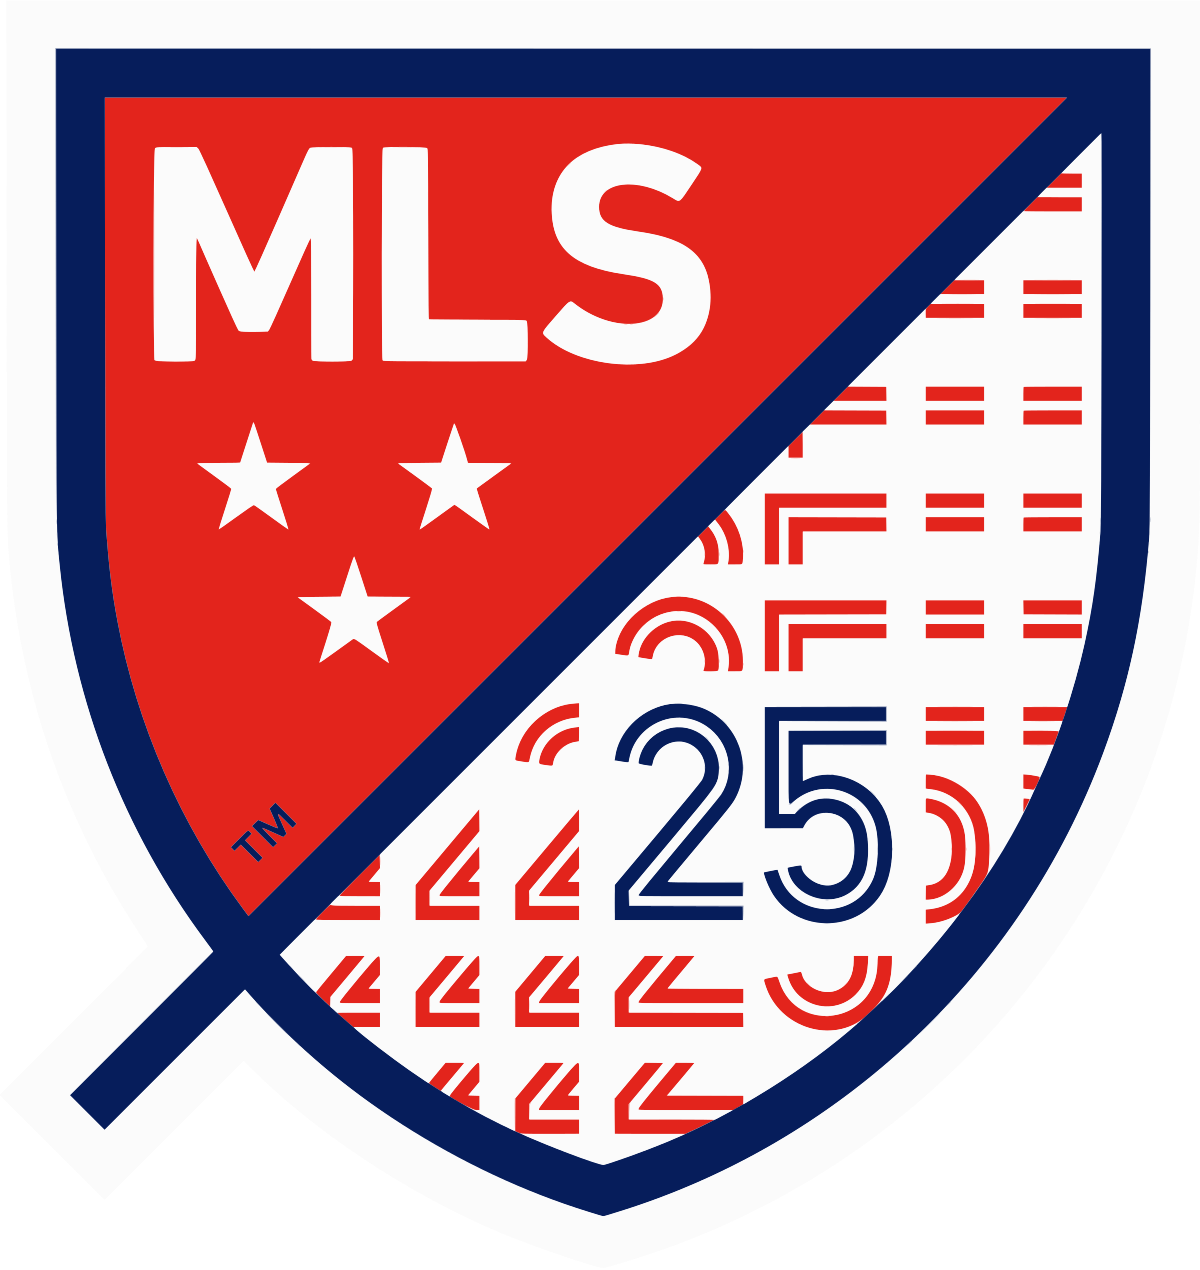 2020 MLS Jerseys: All 26 new kits for the league's 25th season